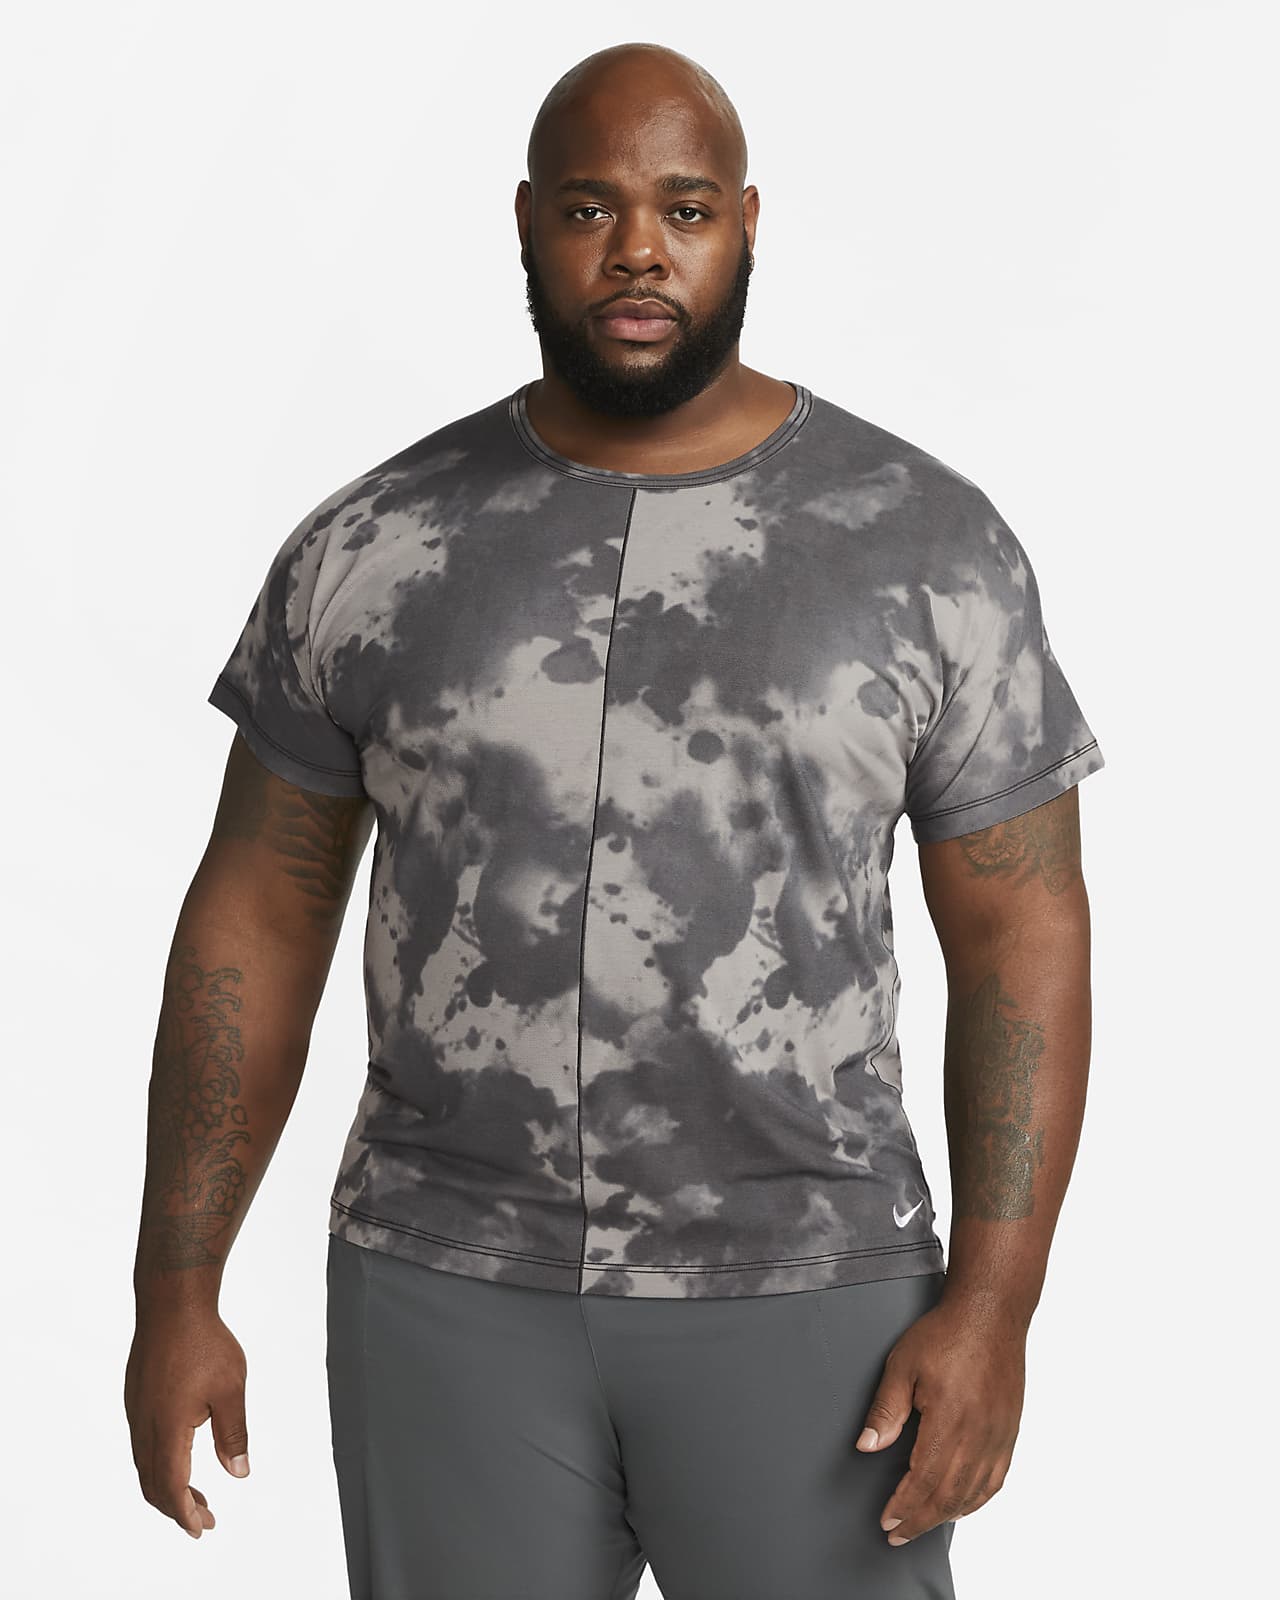 Nike Men's Core Dri-FIT Slim Short Sleeve Top